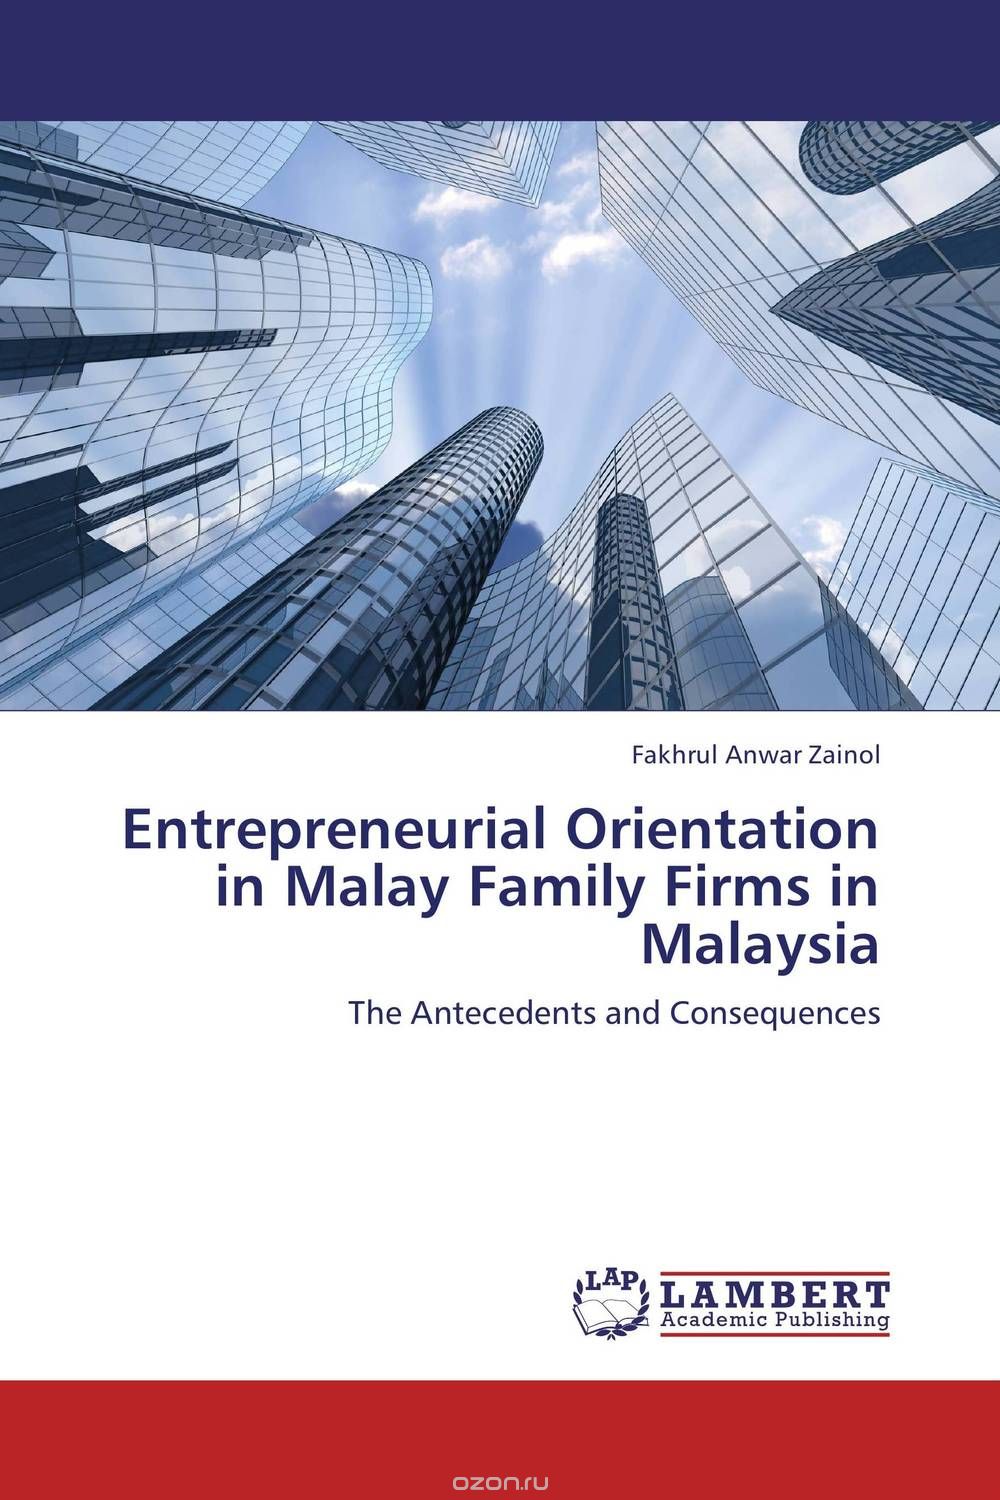 Скачать книгу "Entrepreneurial Orientation in Malay Family Firms in Malaysia"